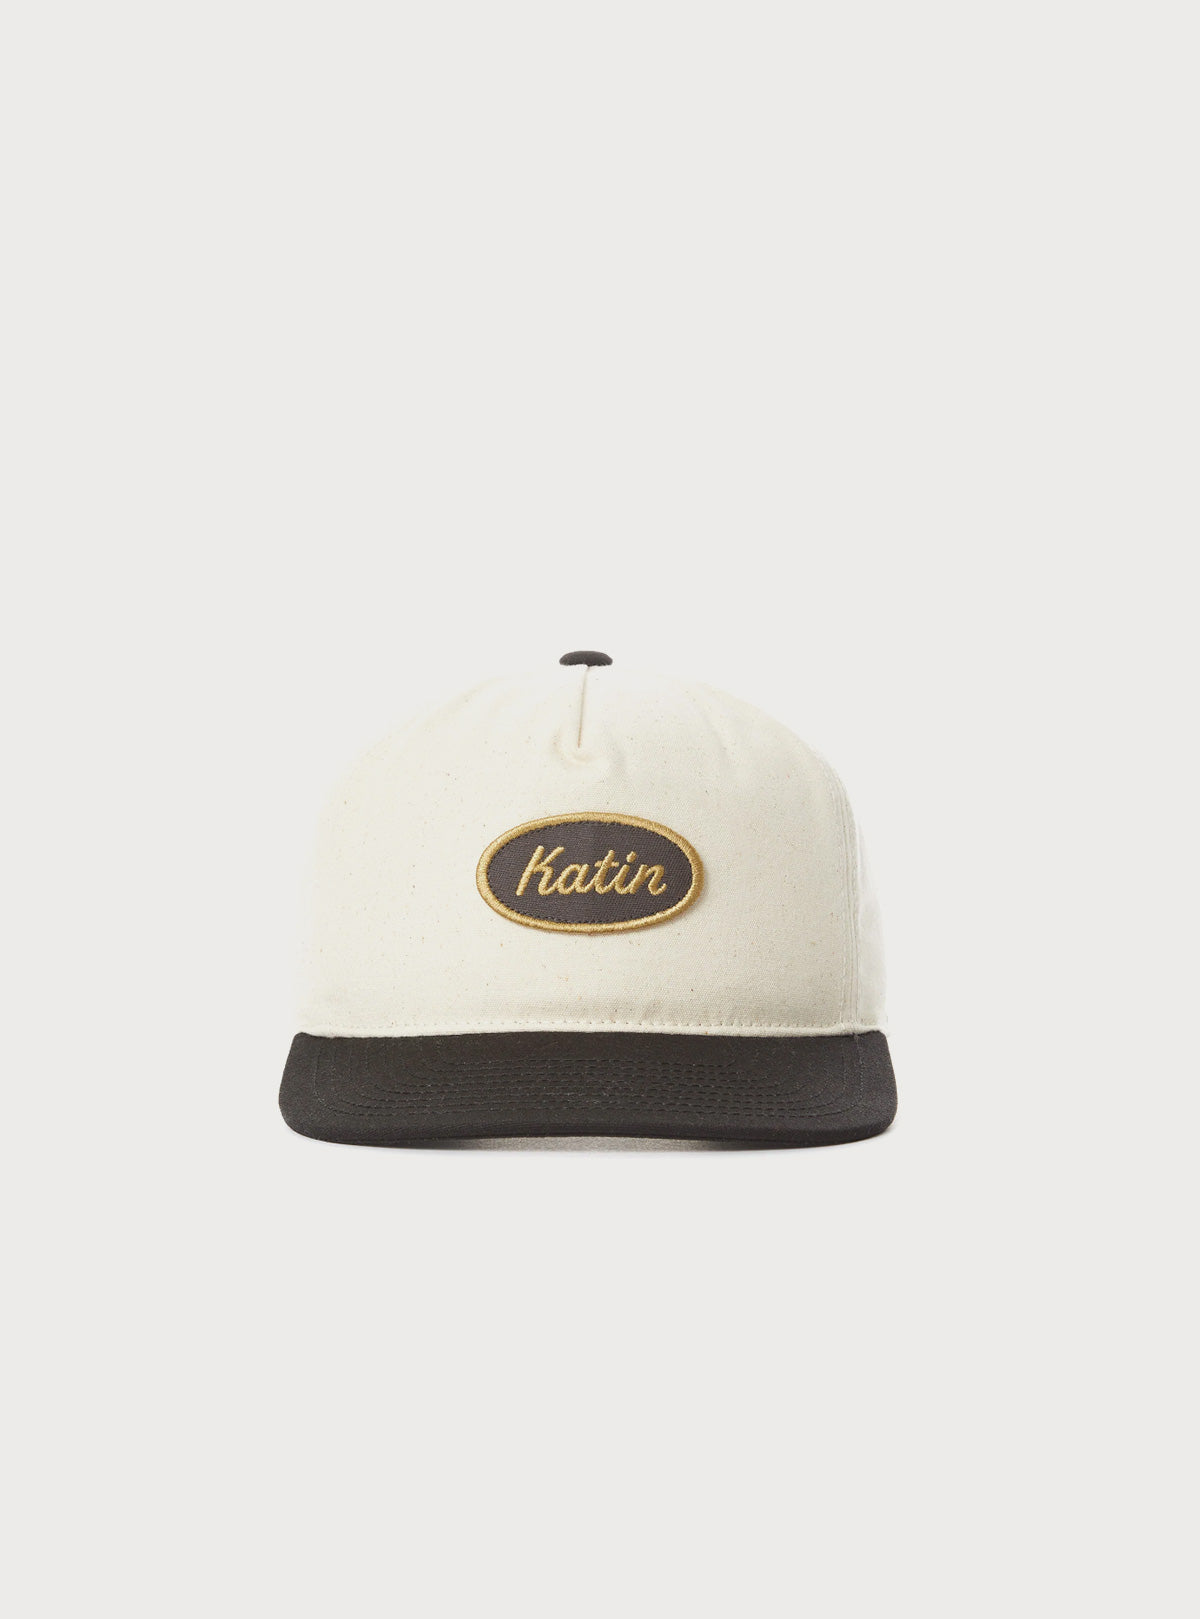 Katin - Roadside Hat - BKWS